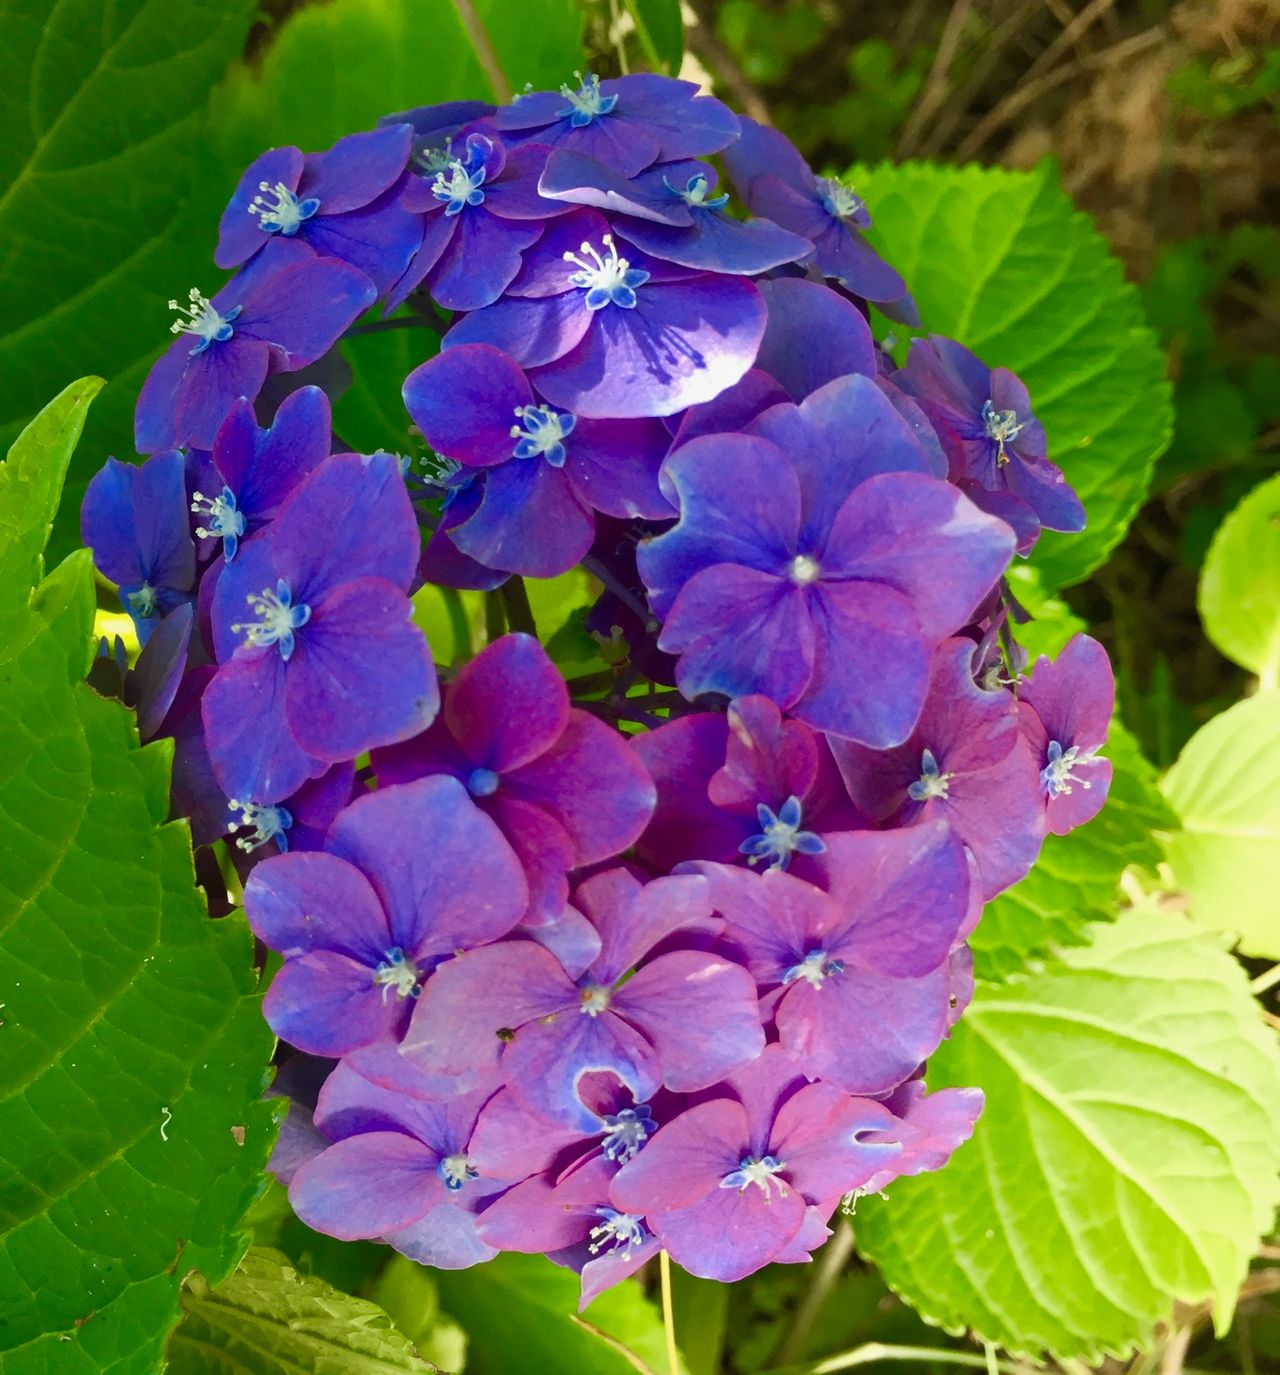 Blue and purple in one hydrangea.